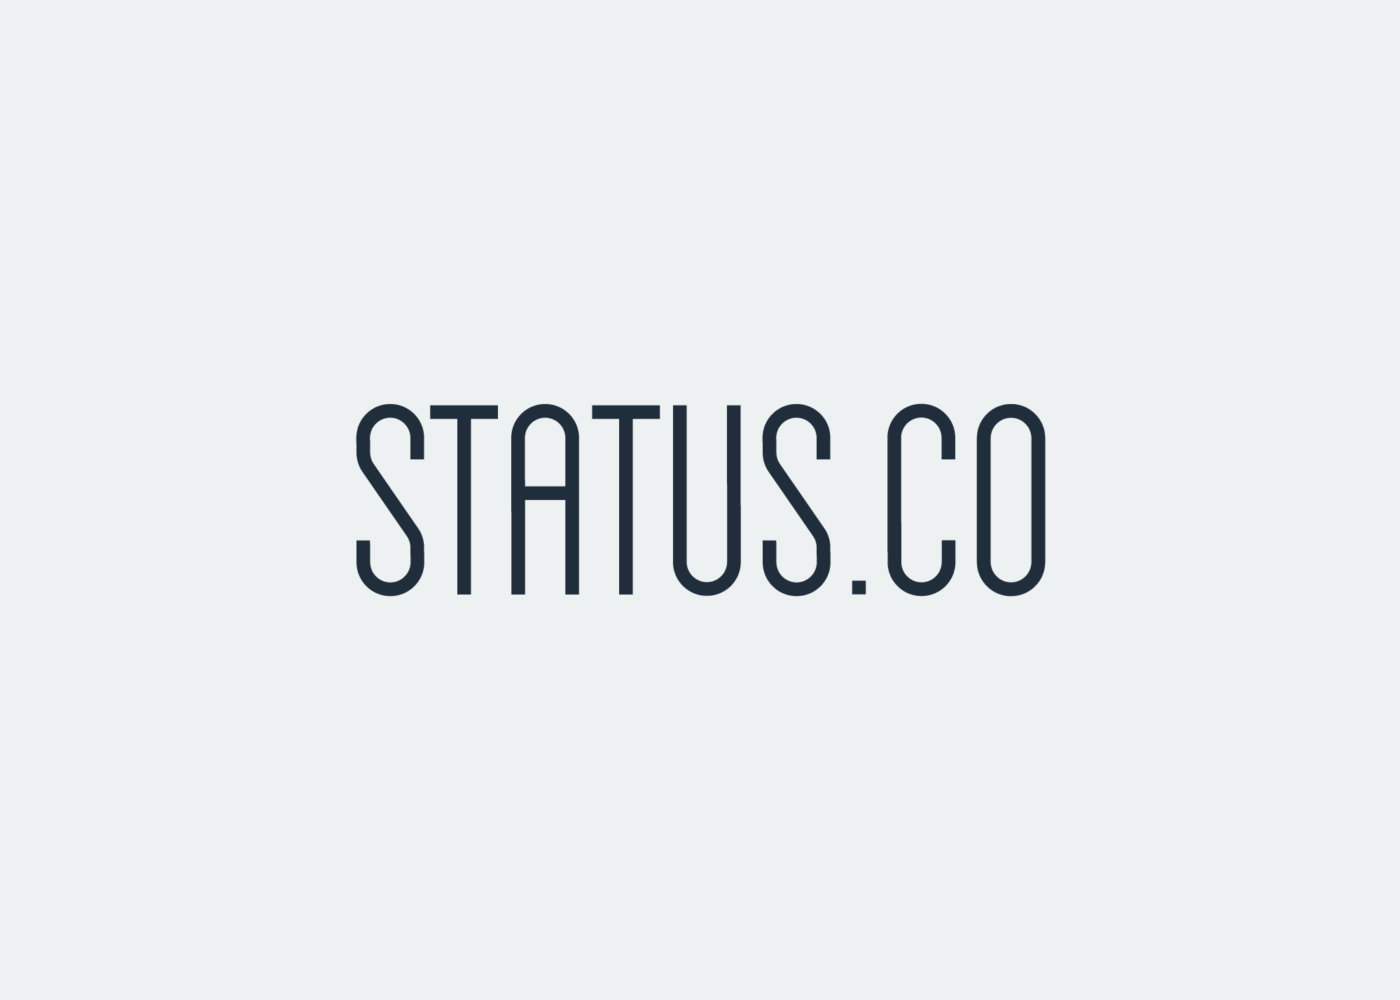 Status.co Logo in blue on white